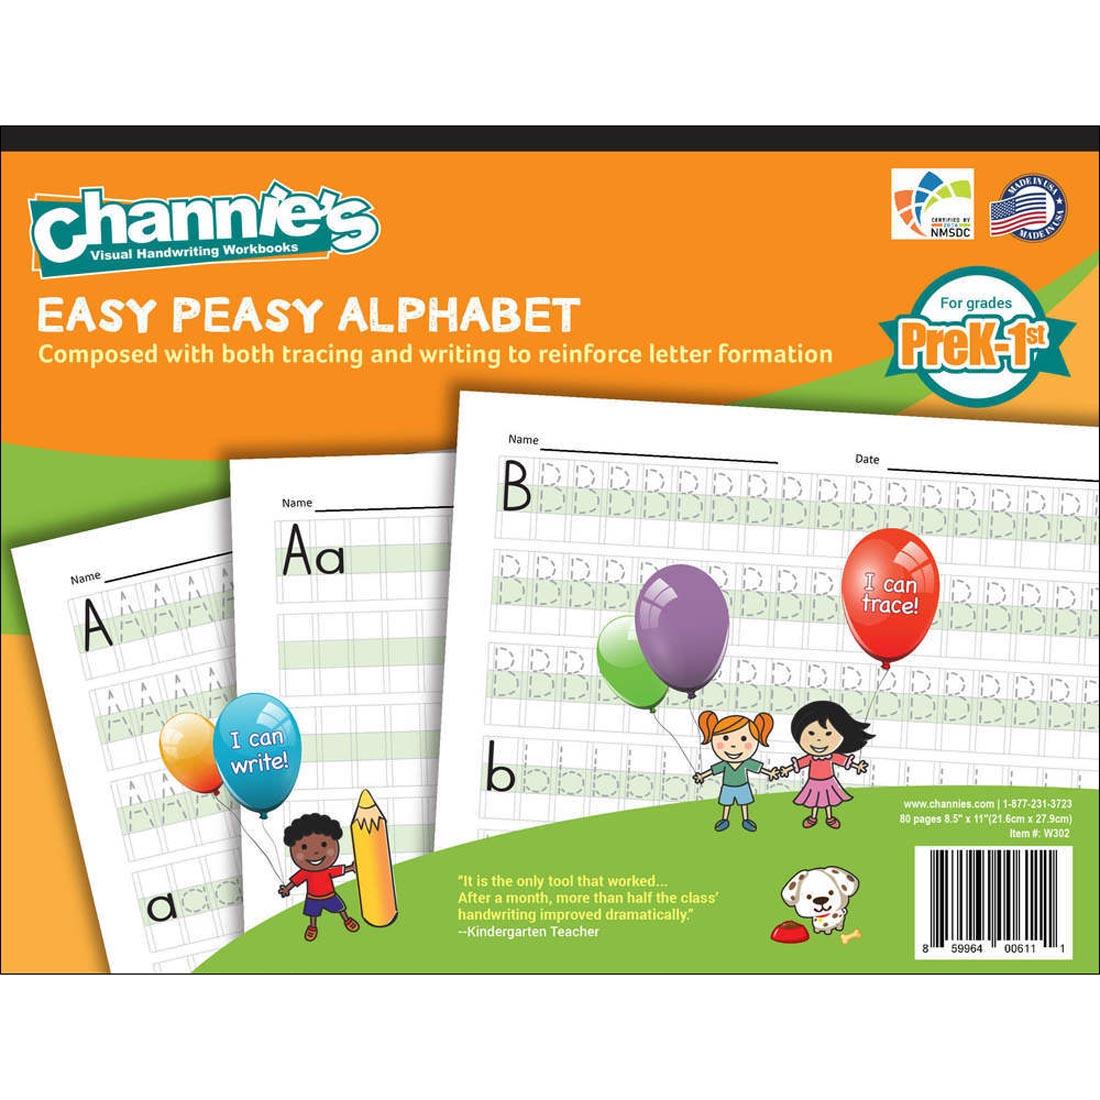 Channie's Visual Handwriting Workbook: Easy Peasy Alphabet